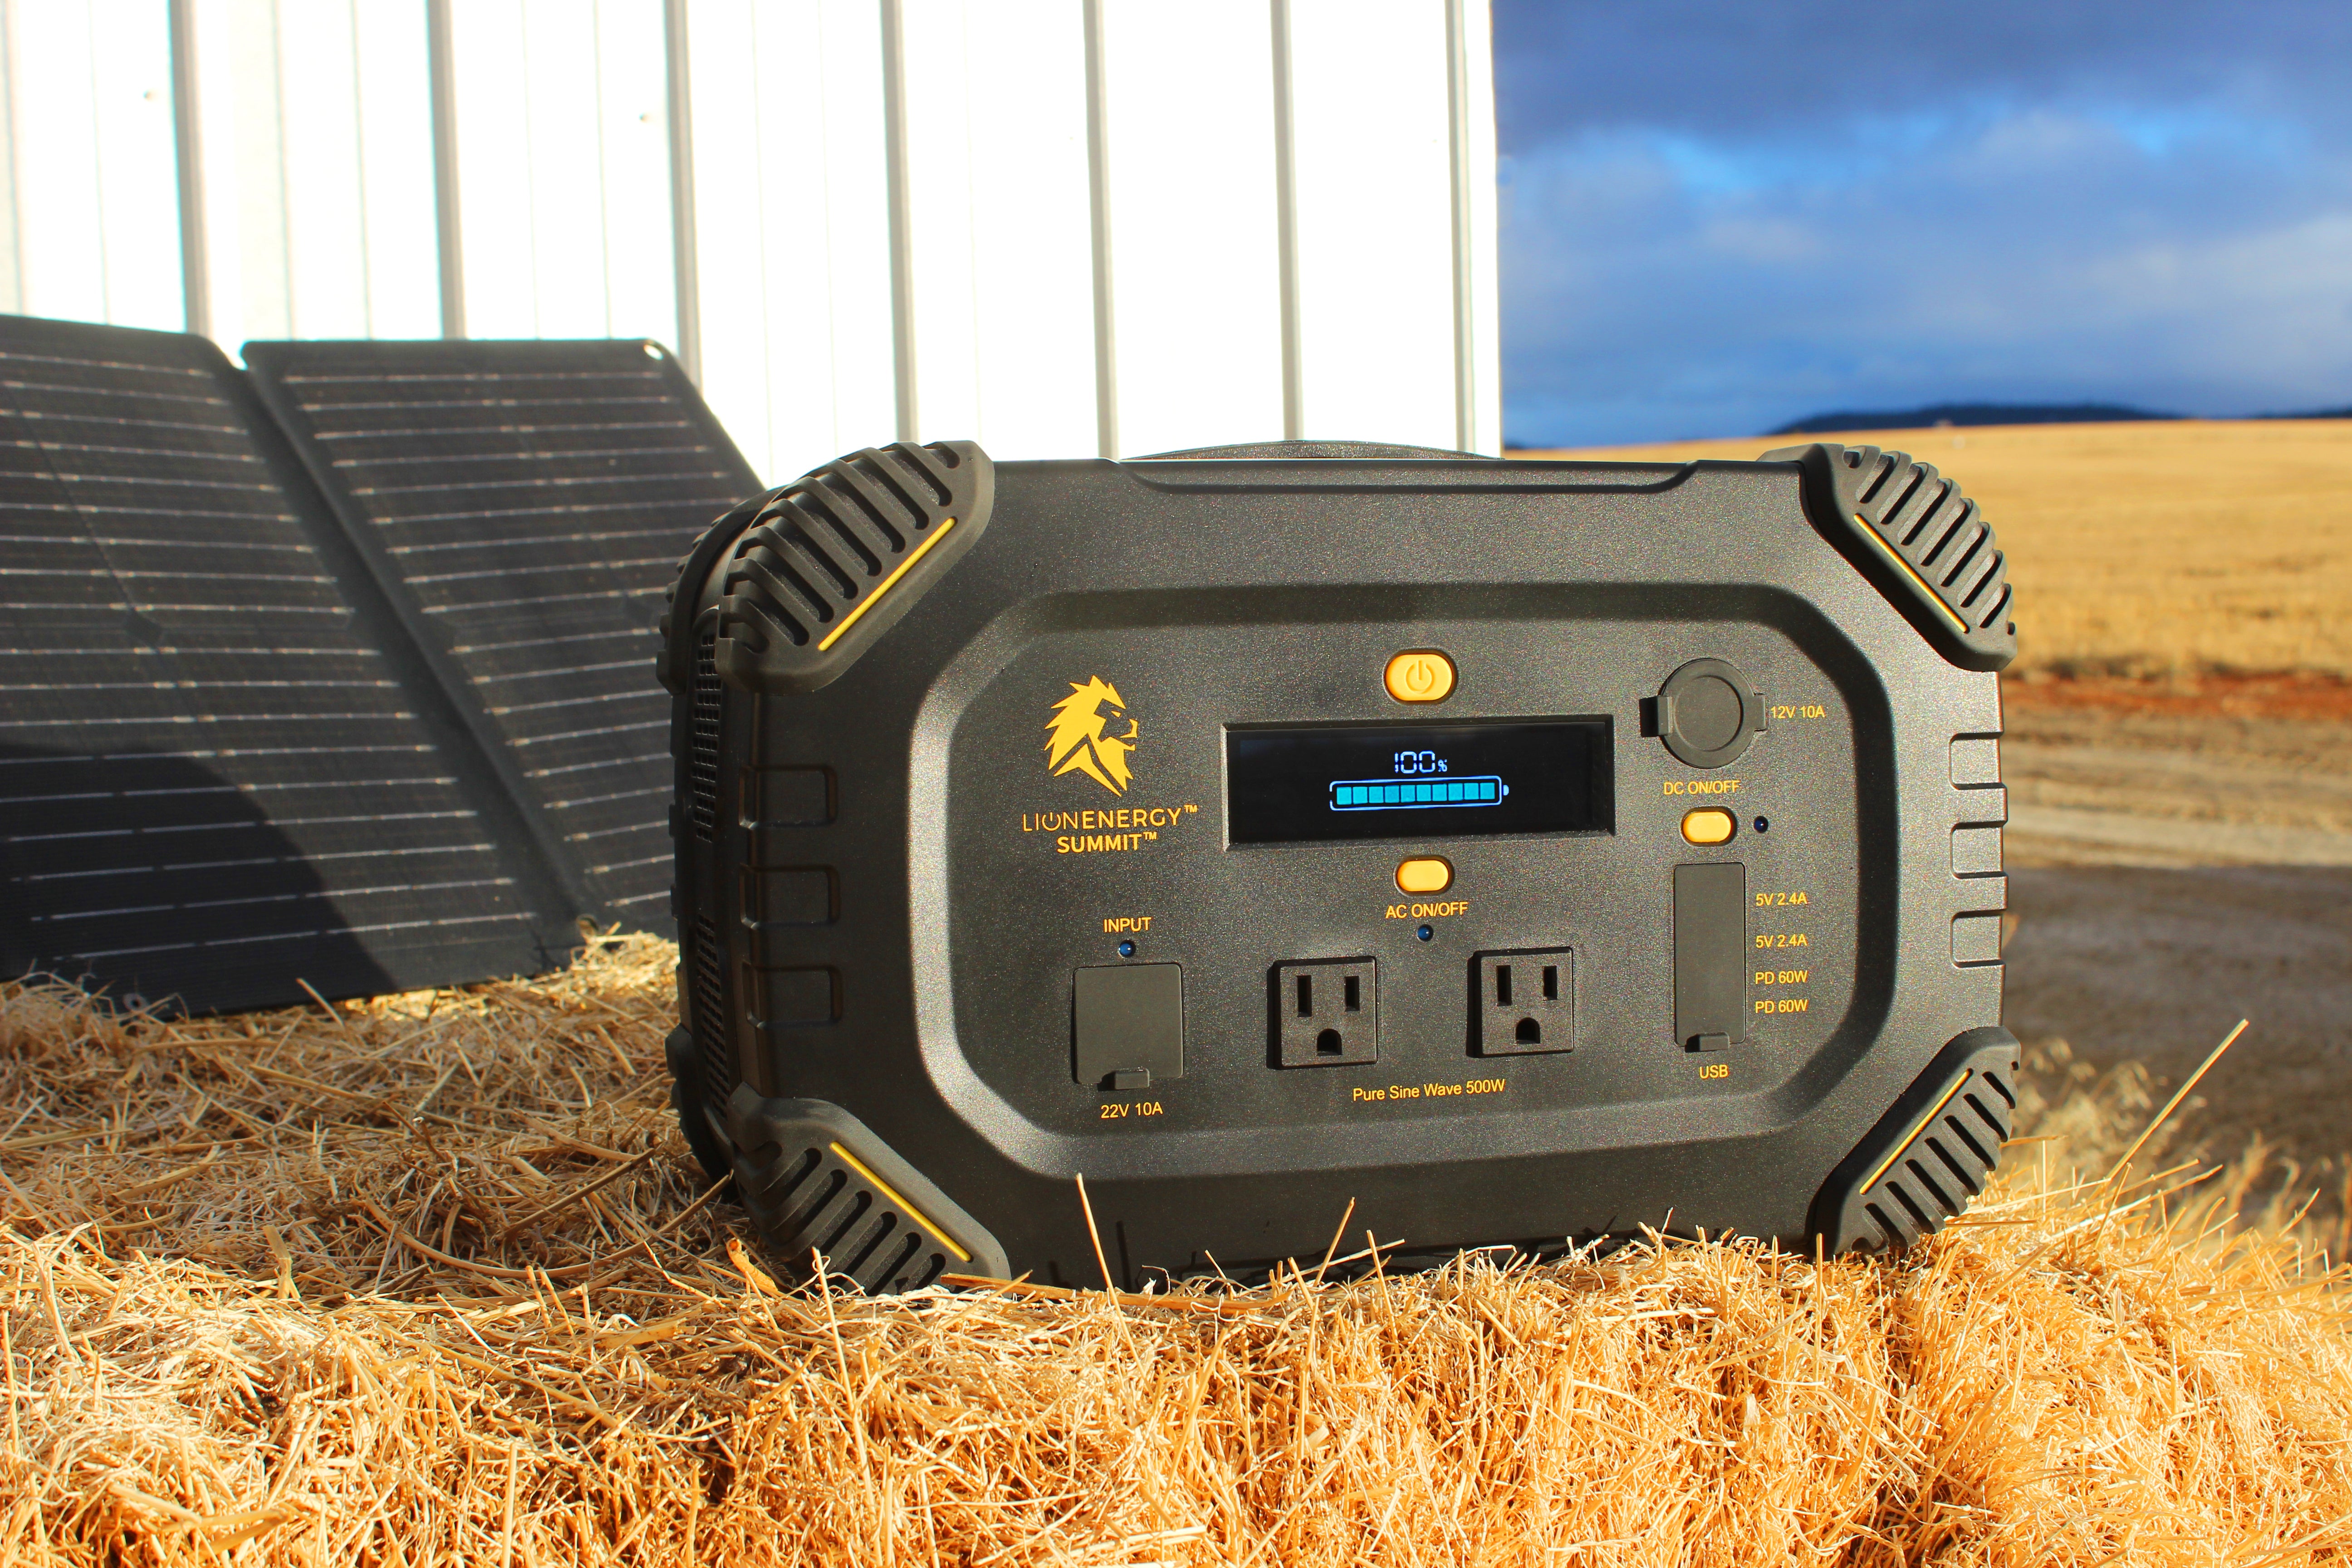 Lion Summit - 530W/665Wh Portable Generator Kit